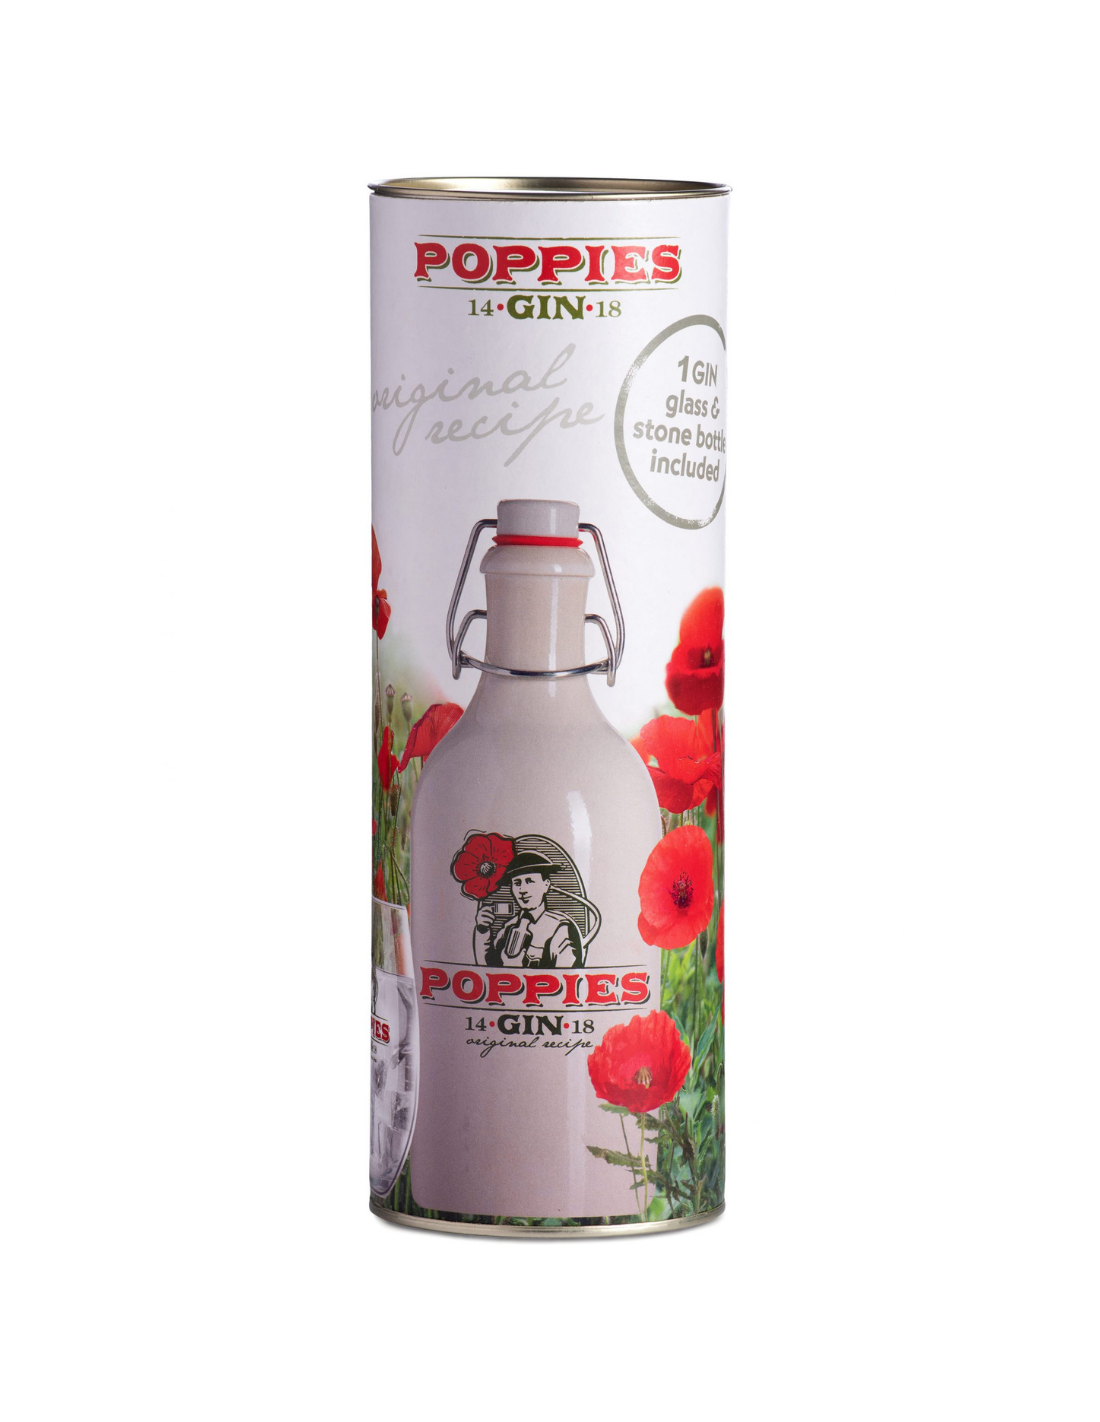 Gin Poppies + cutie cadou + pahar, 17% alc., 0.7L, Belgia alcooldiscount.ro